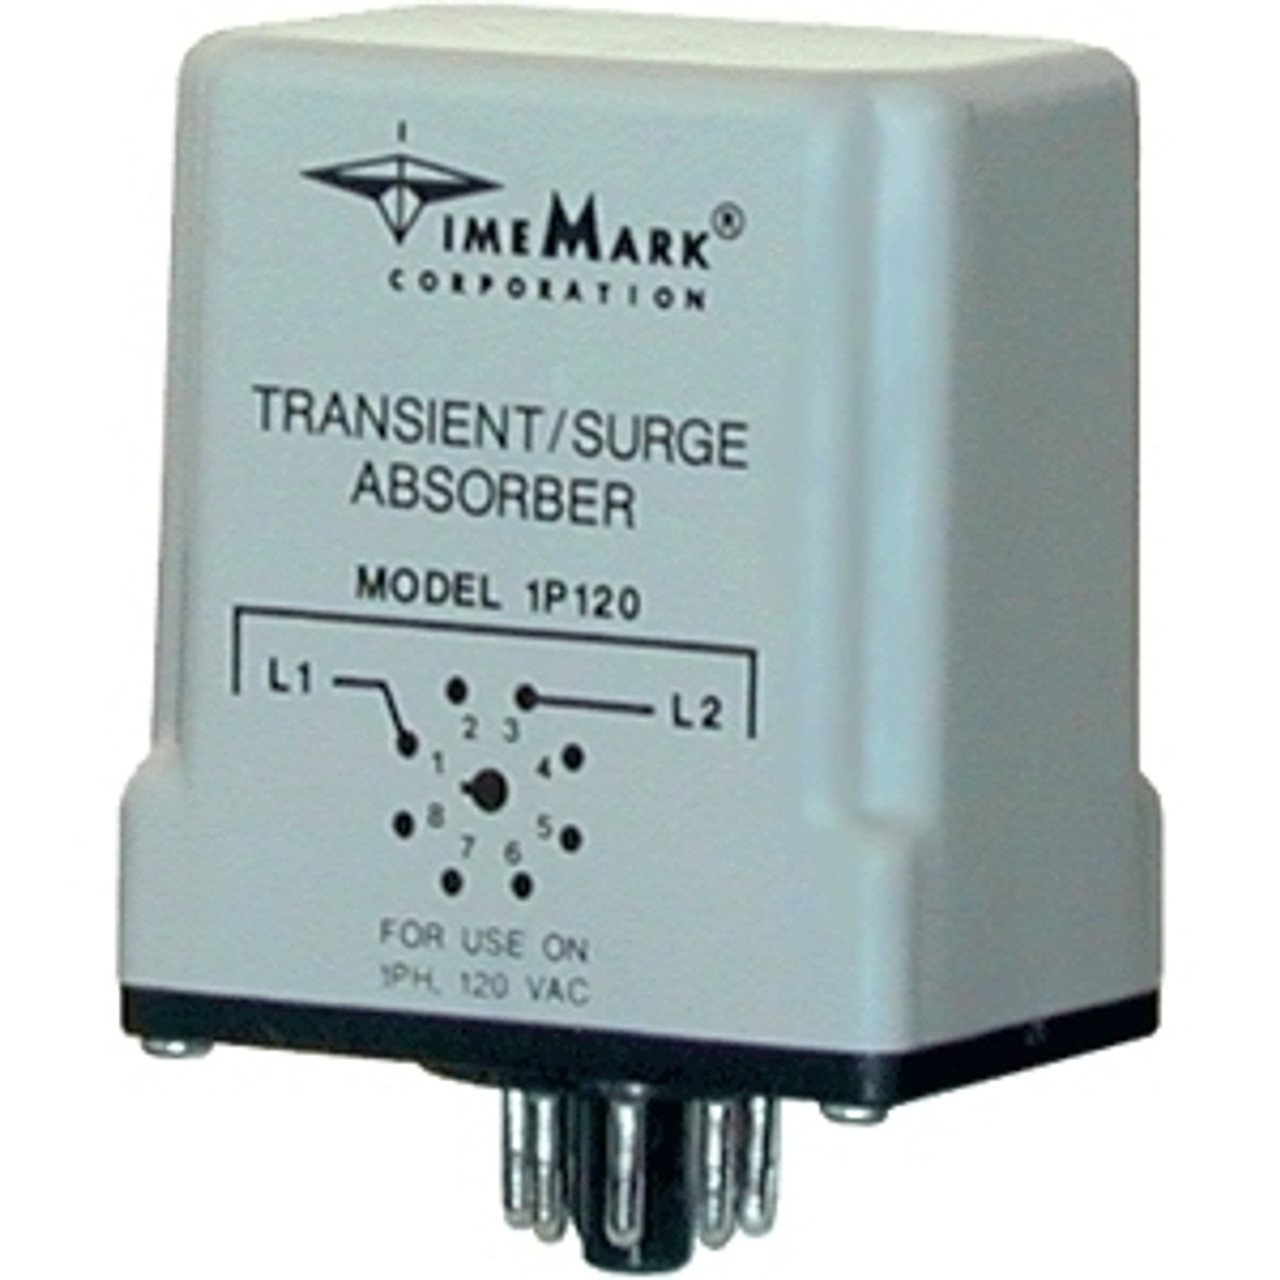 TimeMark 3PD-480 3-Phase